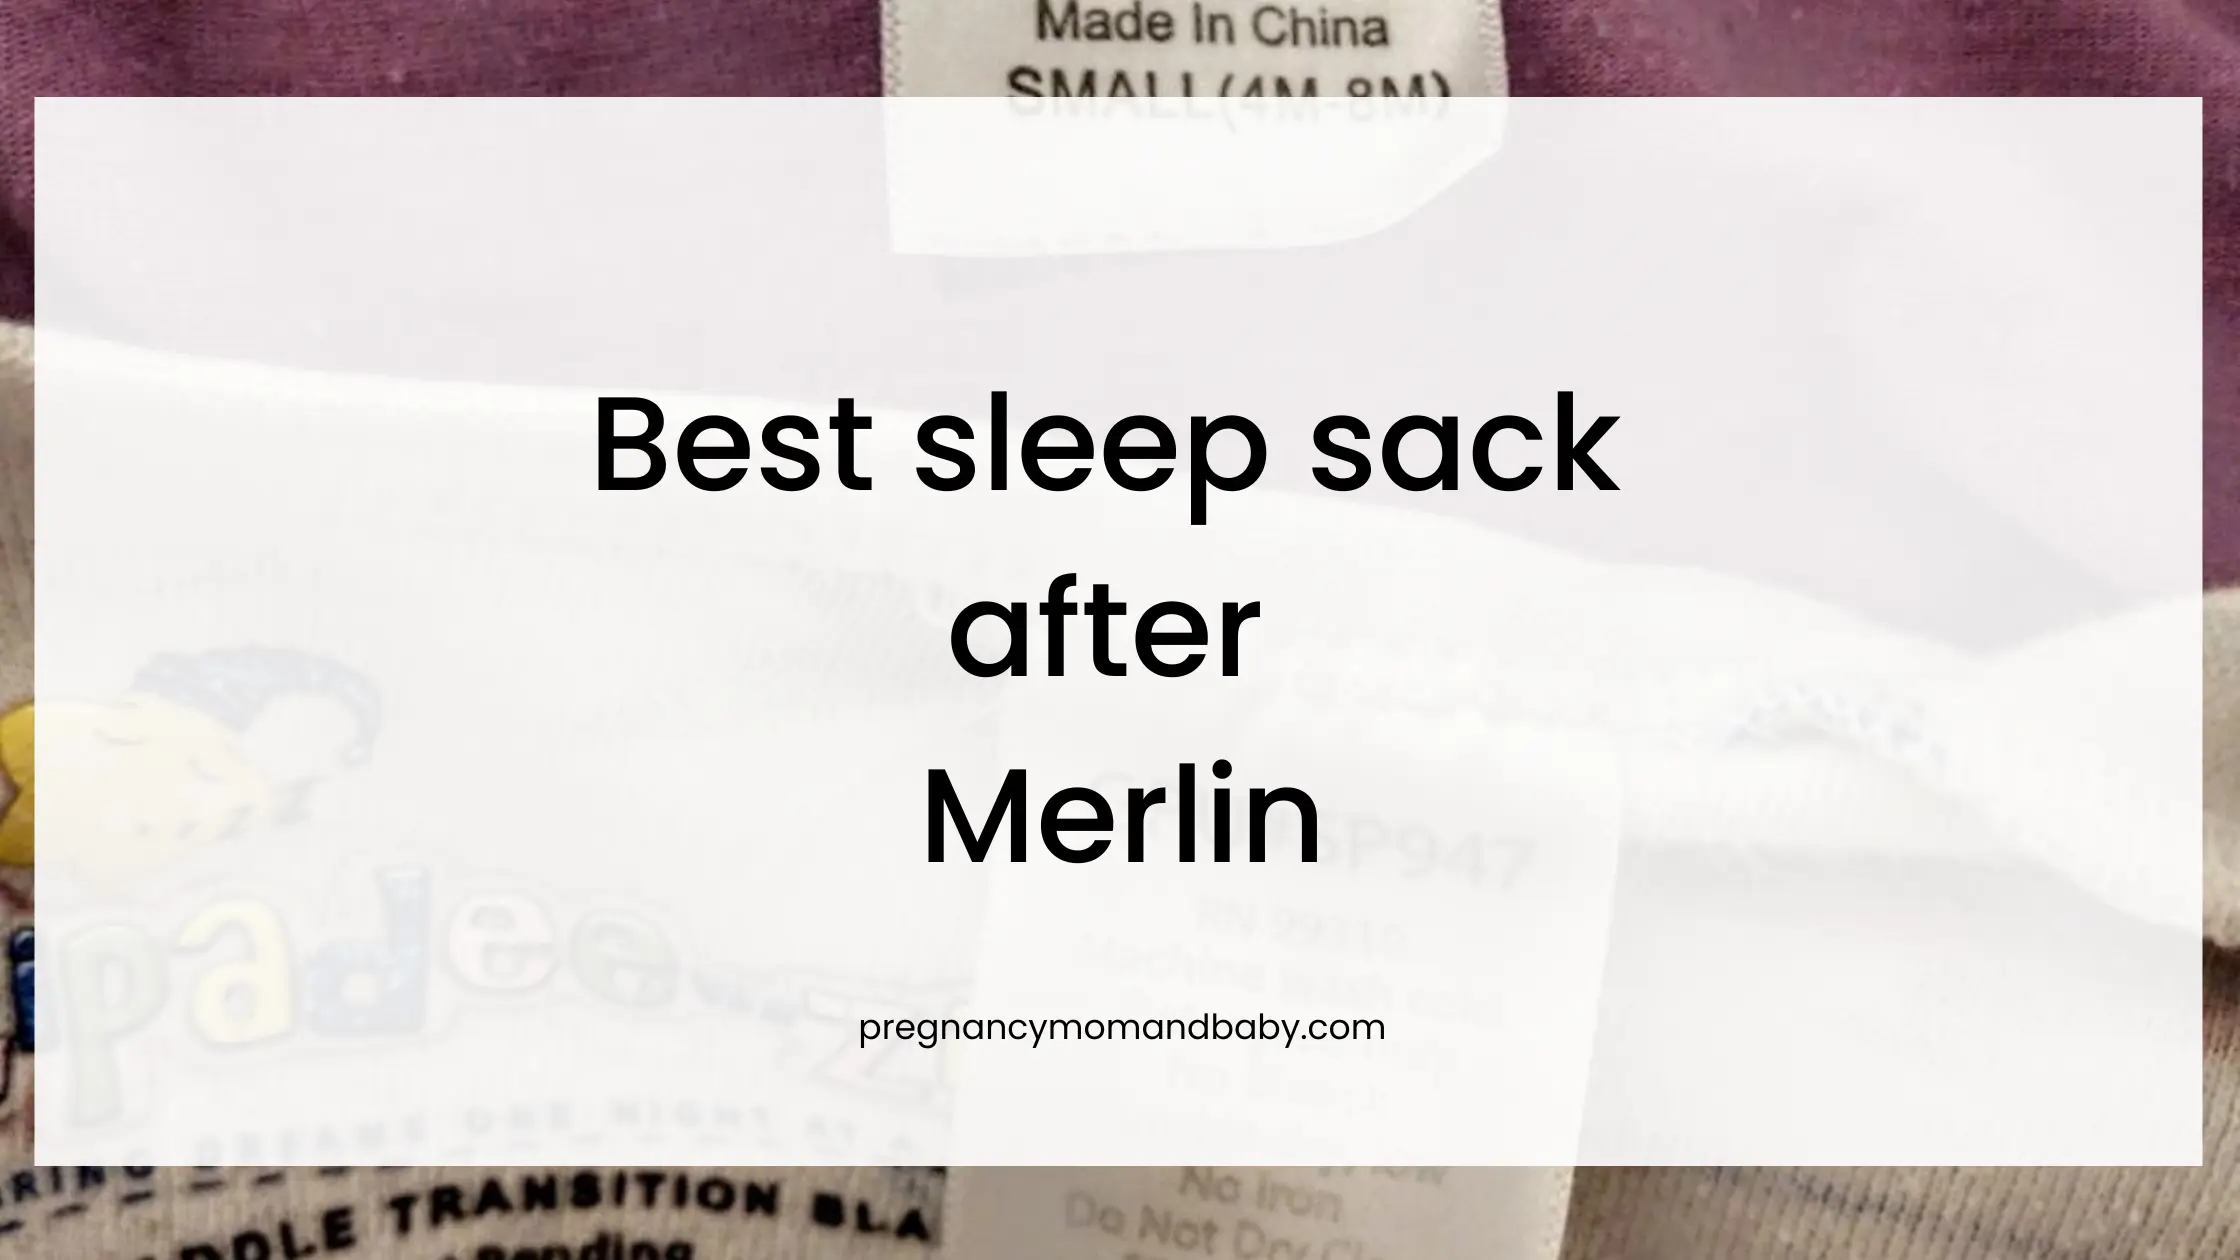 Best sleep sack after merlin